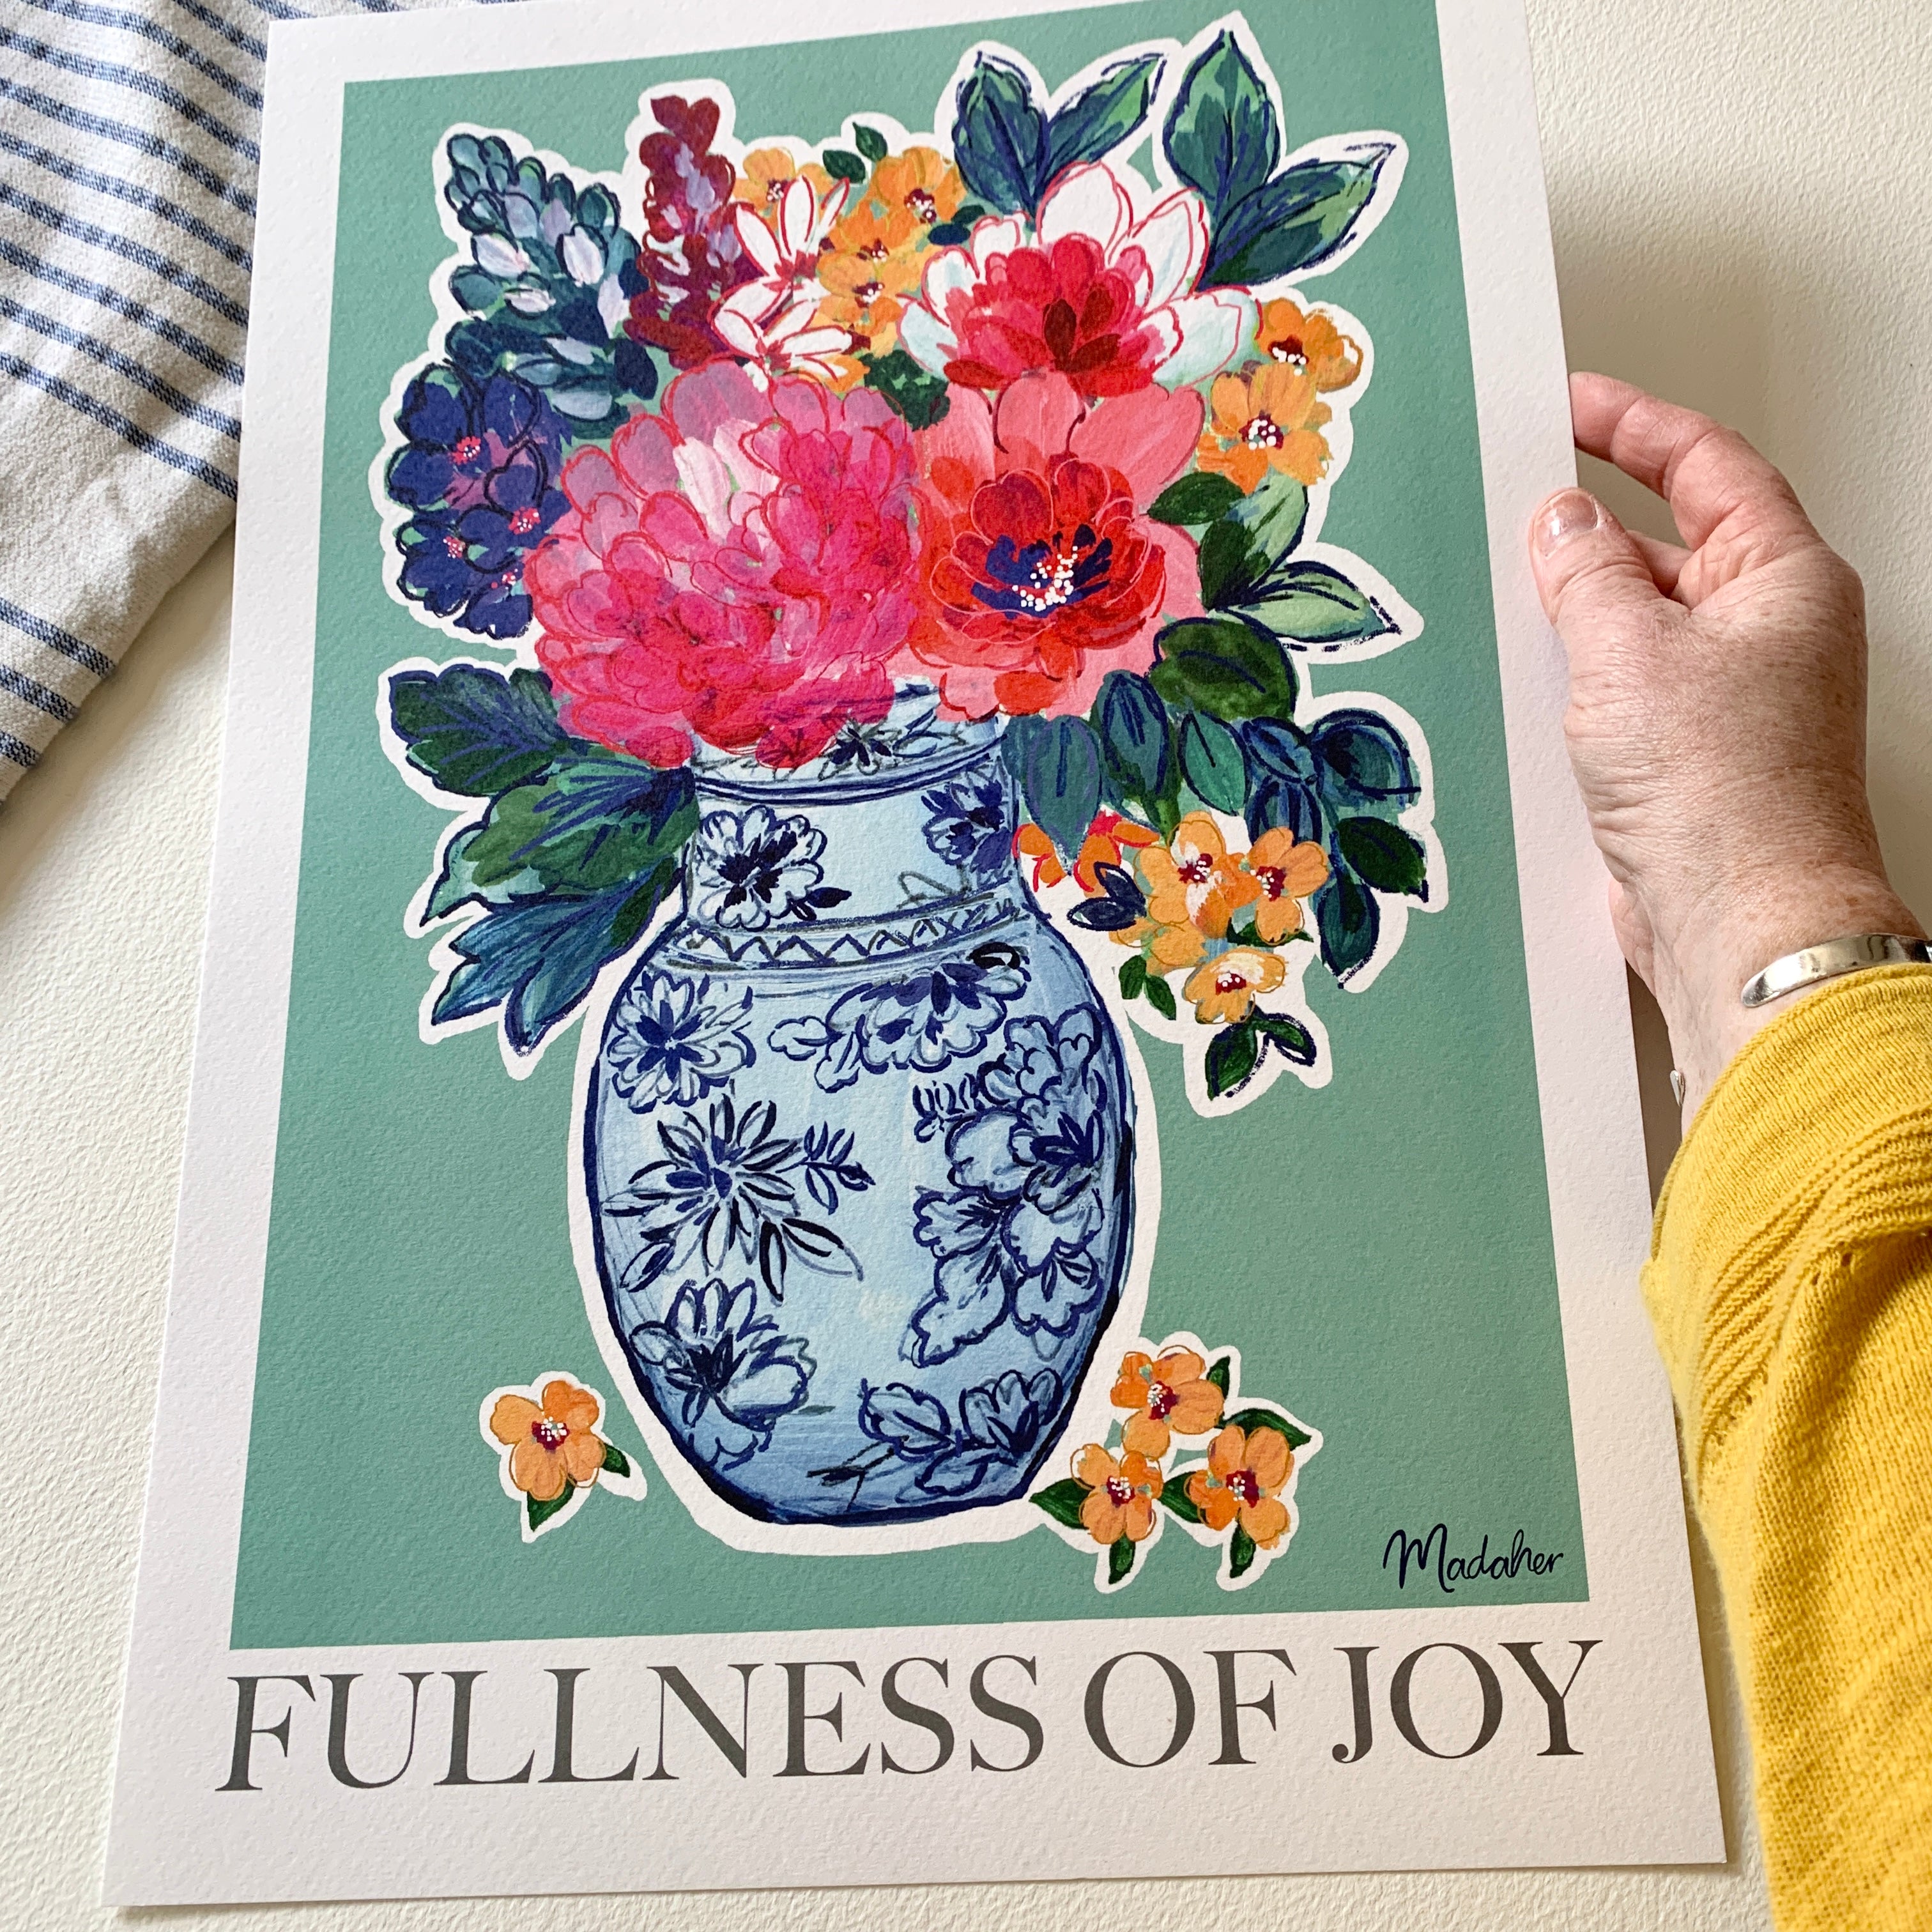 Fullness of Joy art print